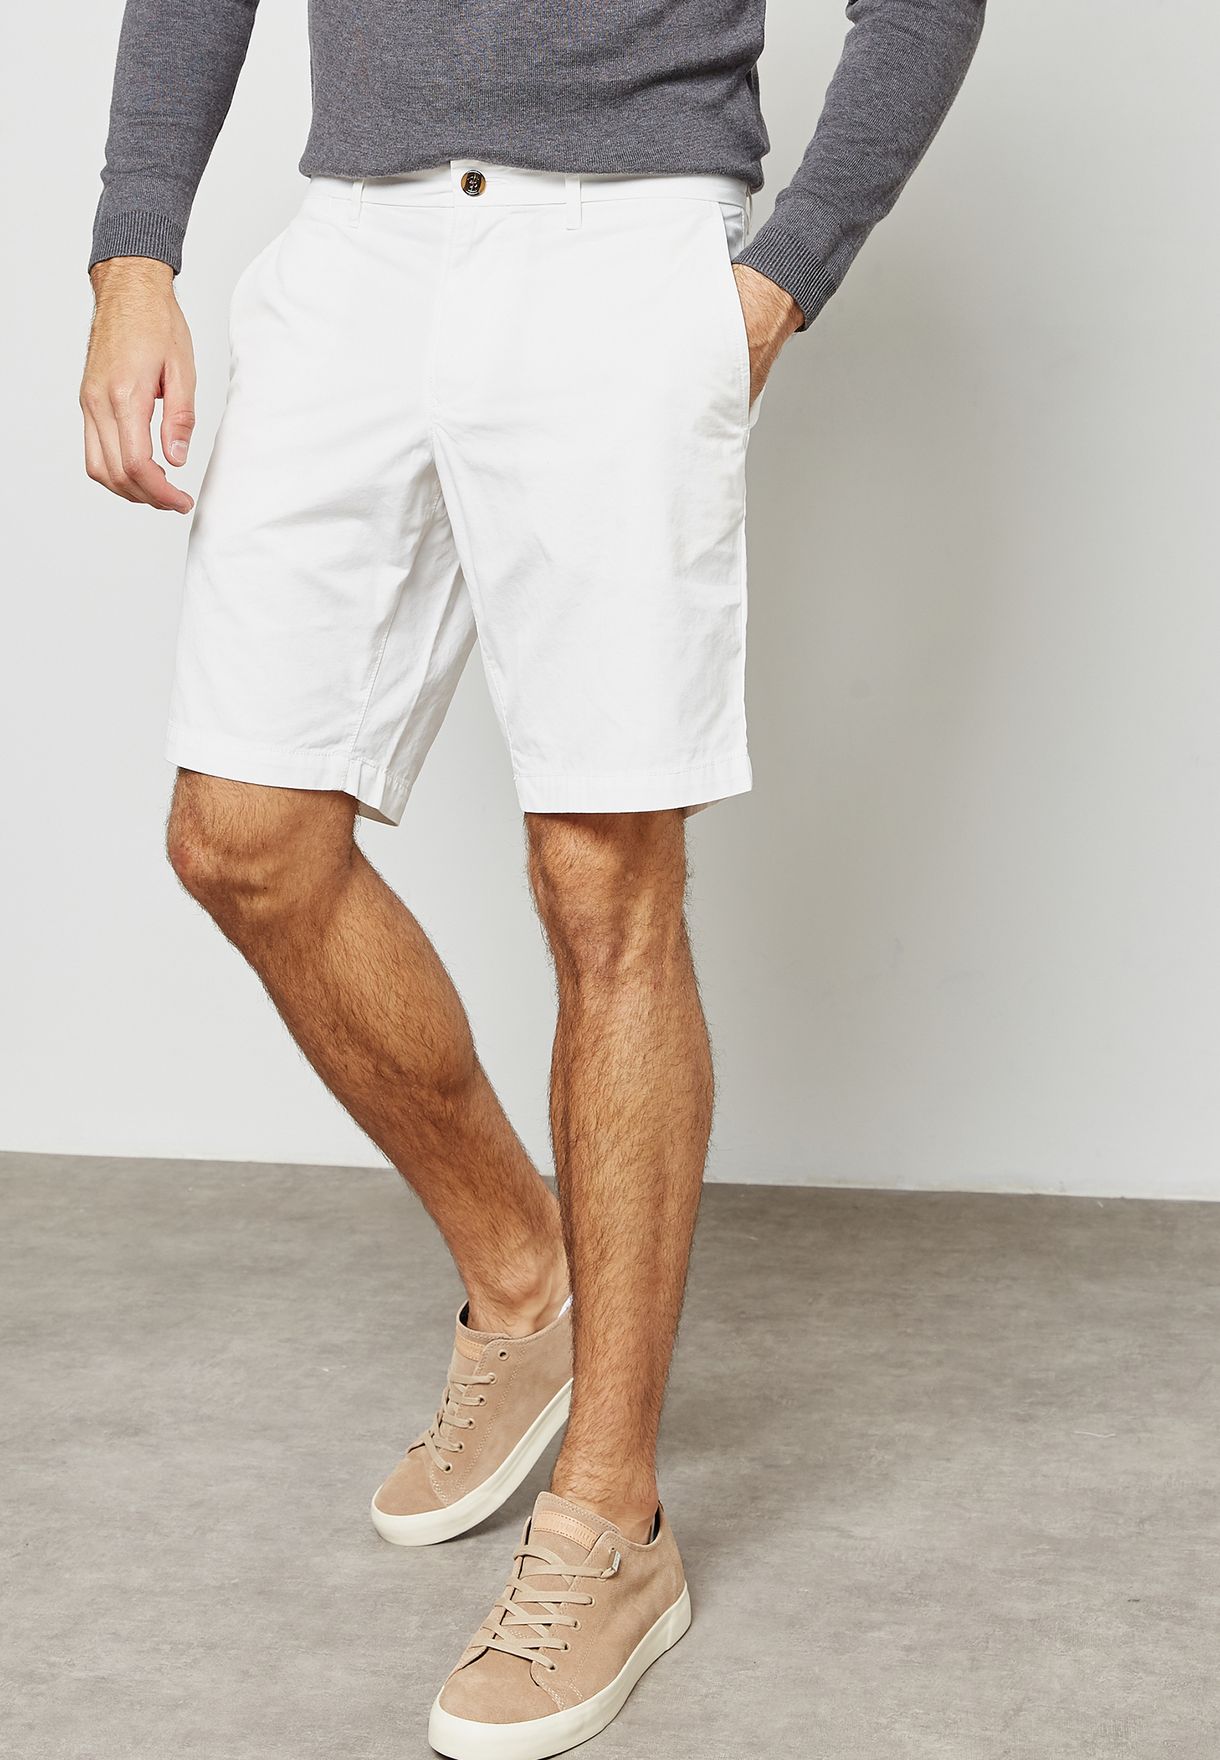 tommy hilfiger mens white shorts